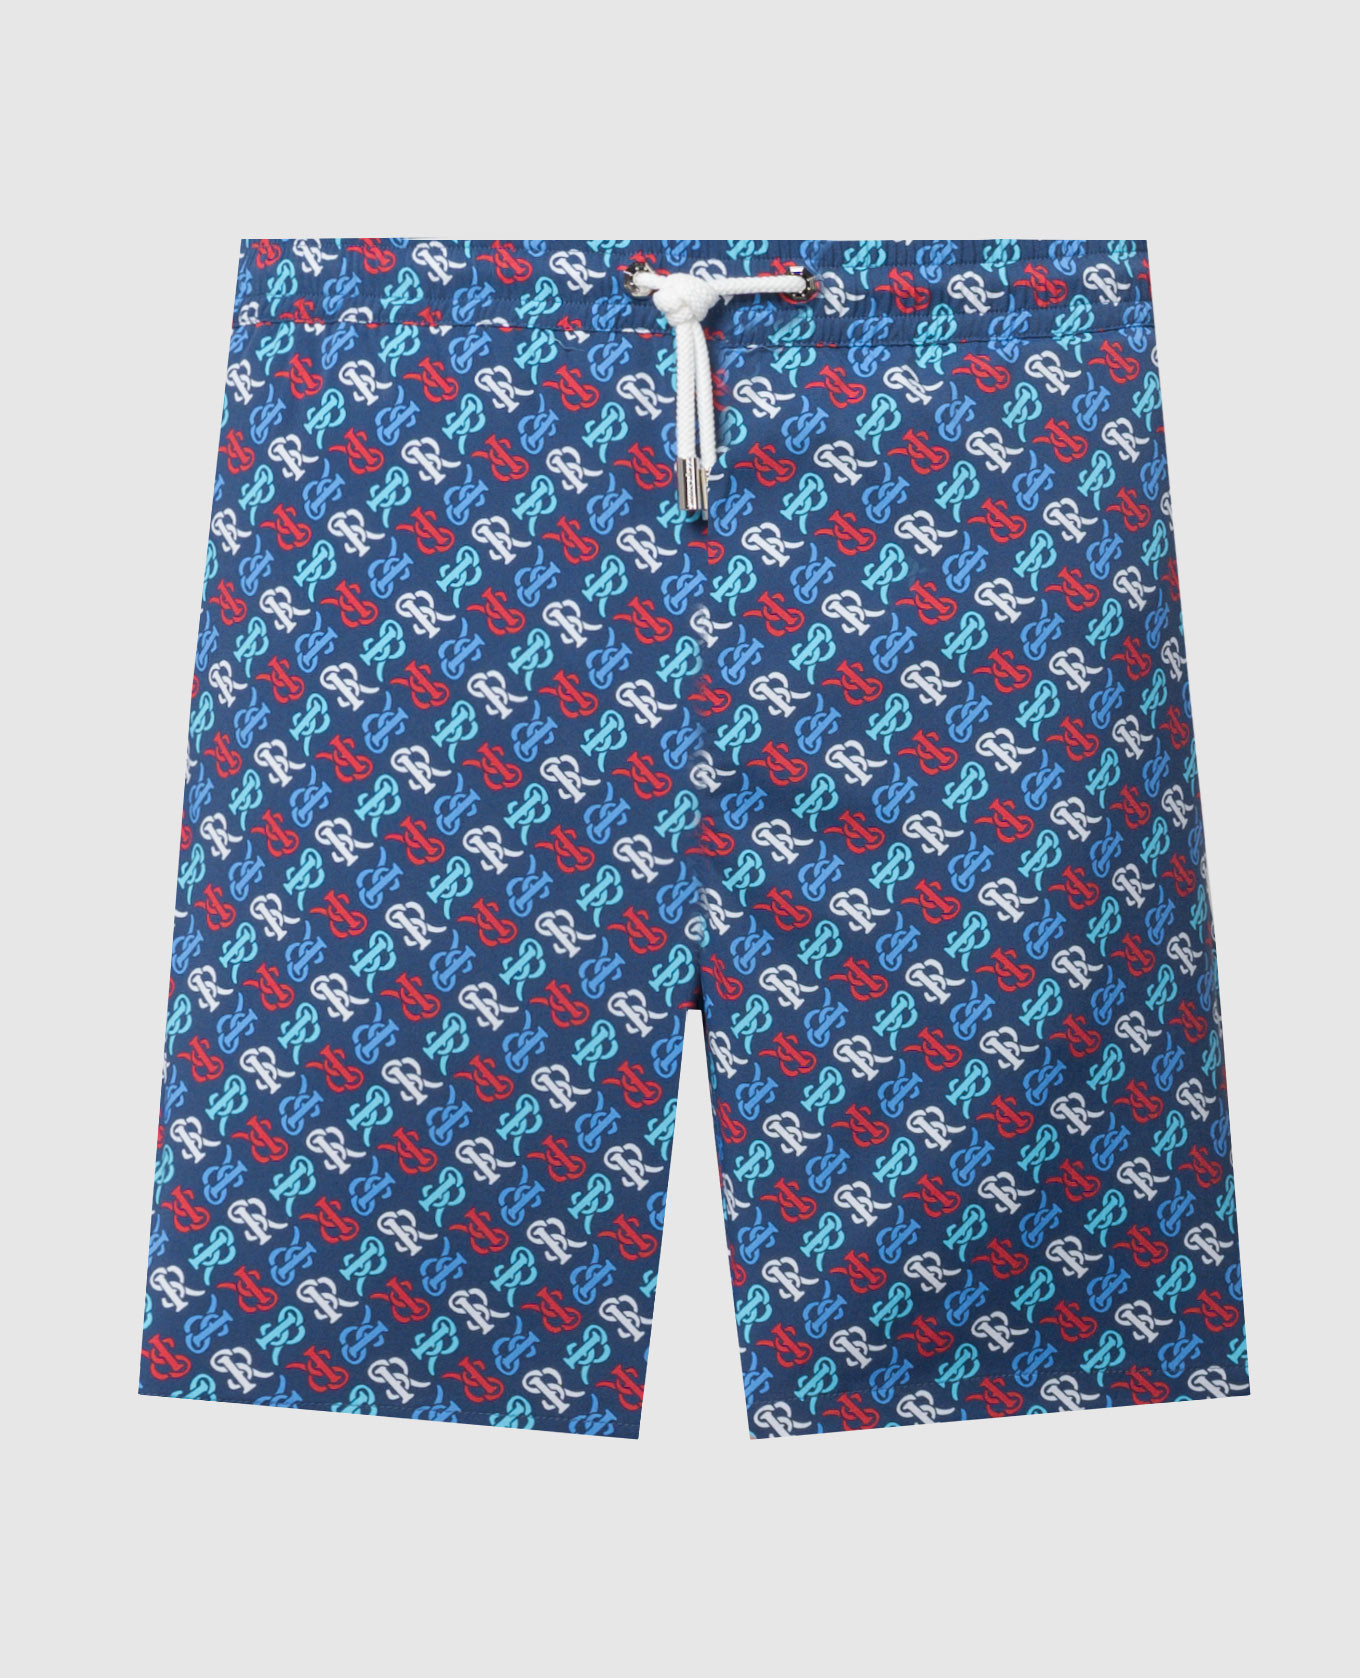 Blue logo pattern swim shorts